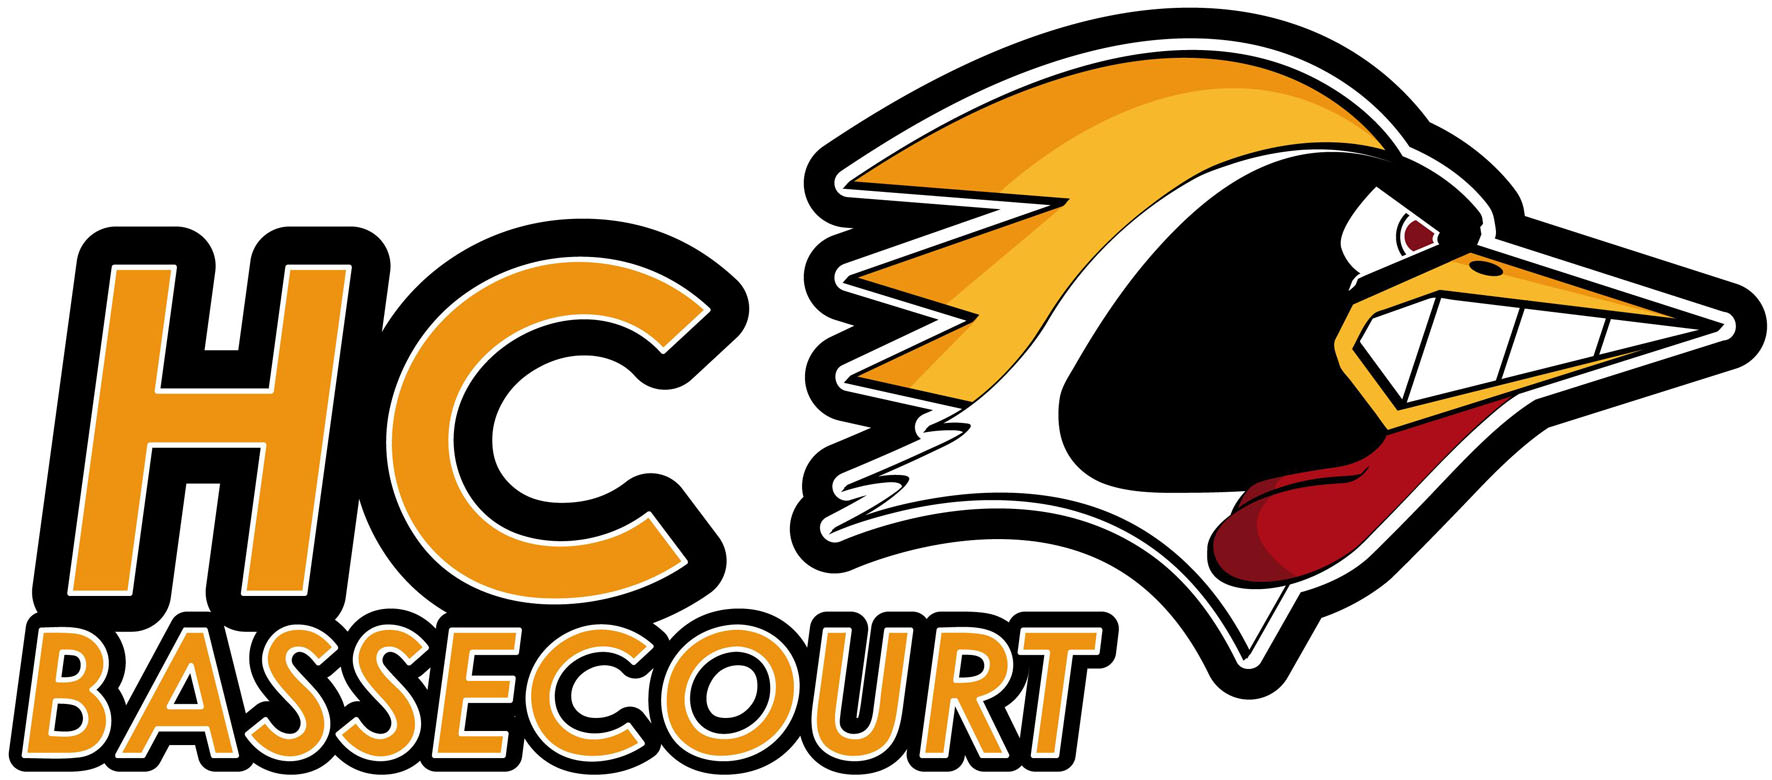 logo HC Bassecourt 005